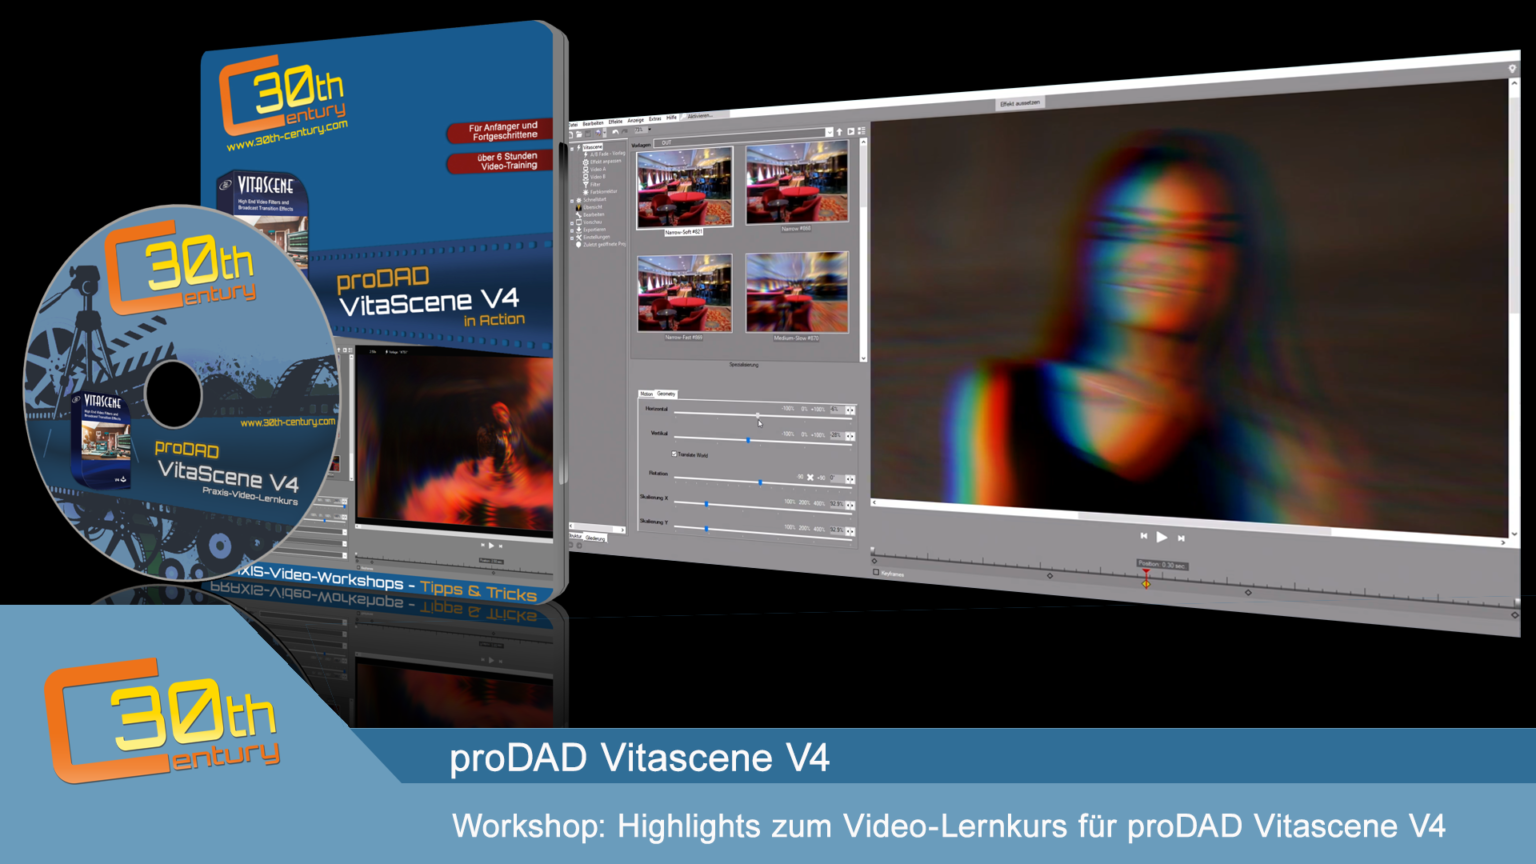 proDAD VitaScene 5.0.312 instal the new for apple